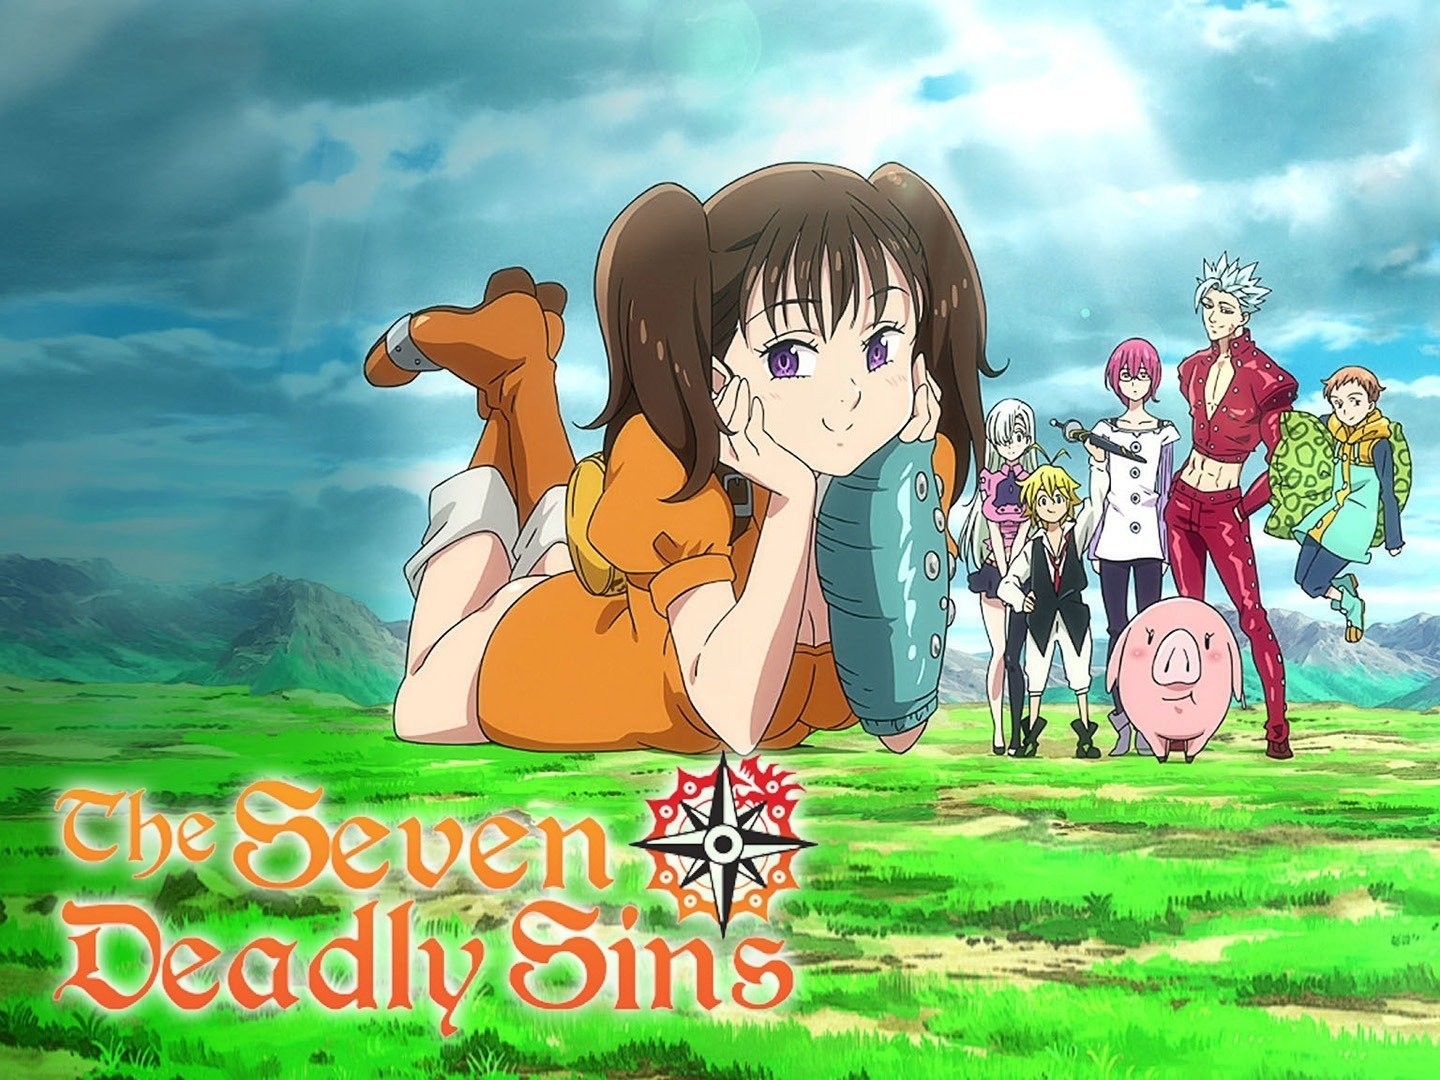 Netflix's Original Anime: Seven Deadly Sins Review - The Oak Leaf